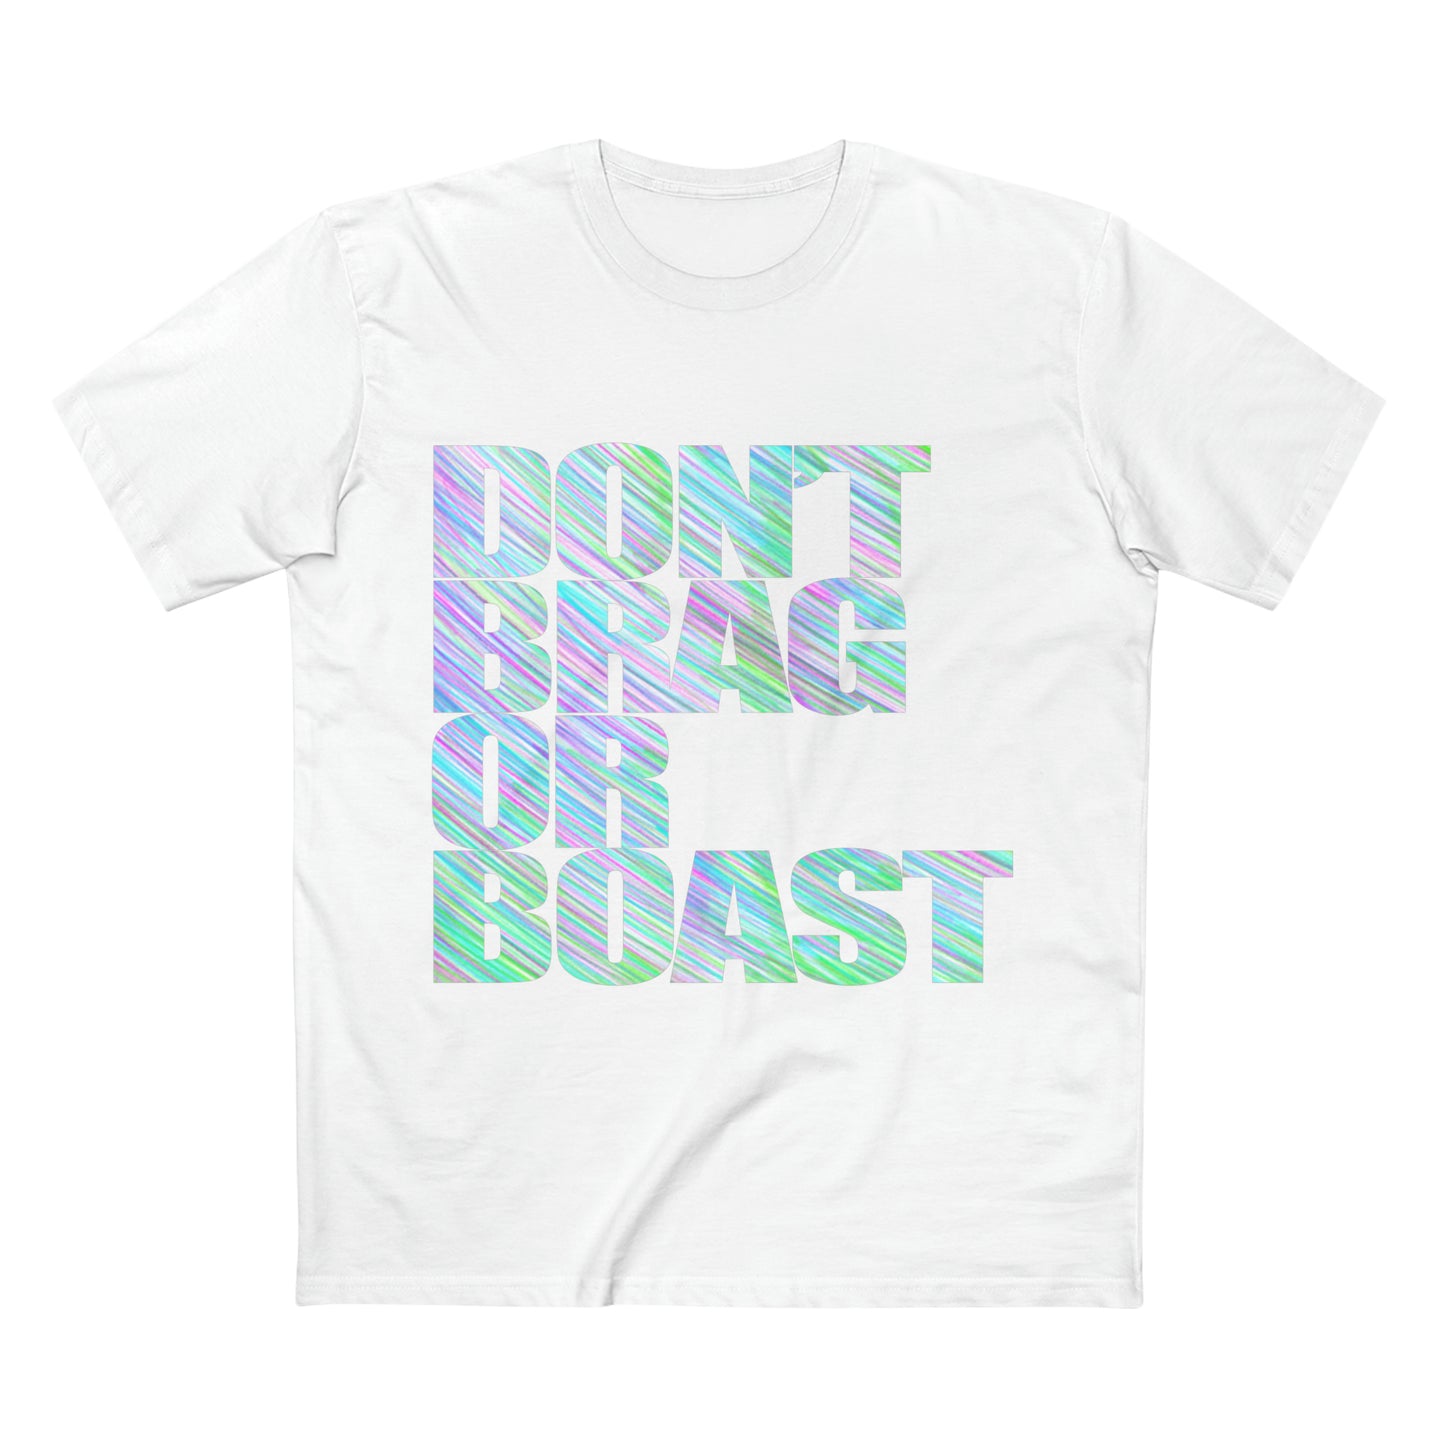 Don't Brag Or Boast Shirt